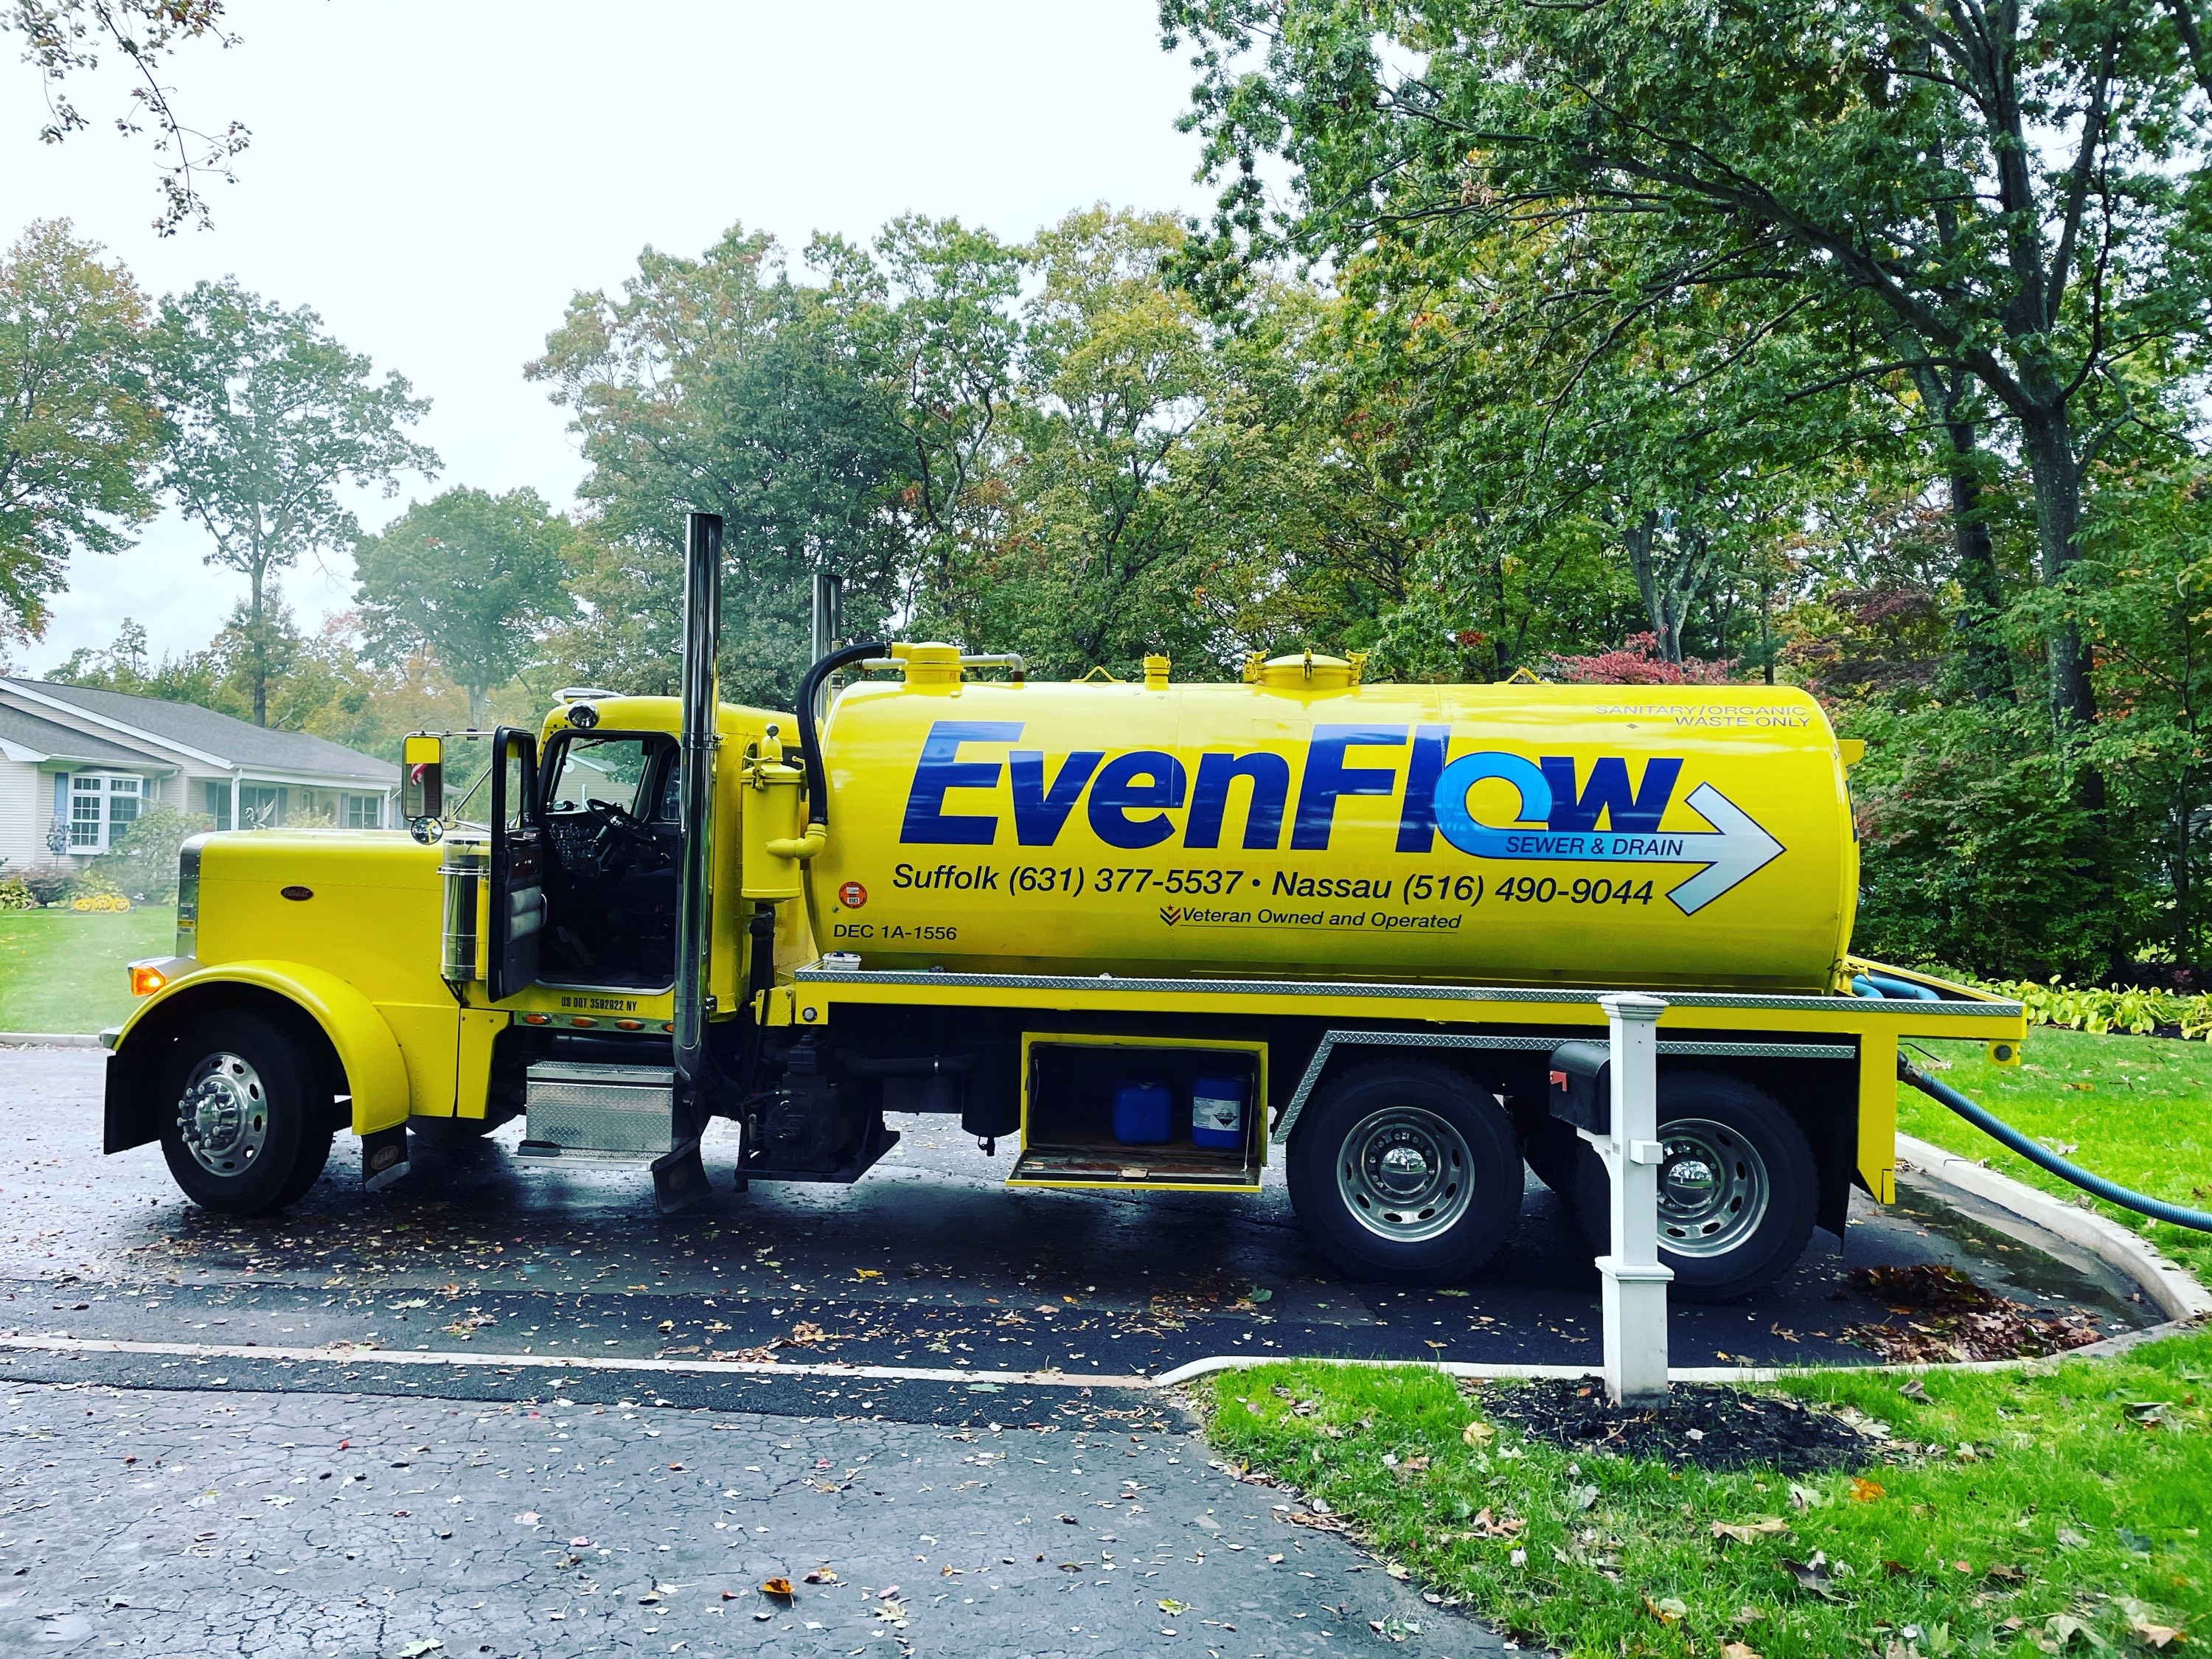 EvenFlow Sewer & Drain Service Logo